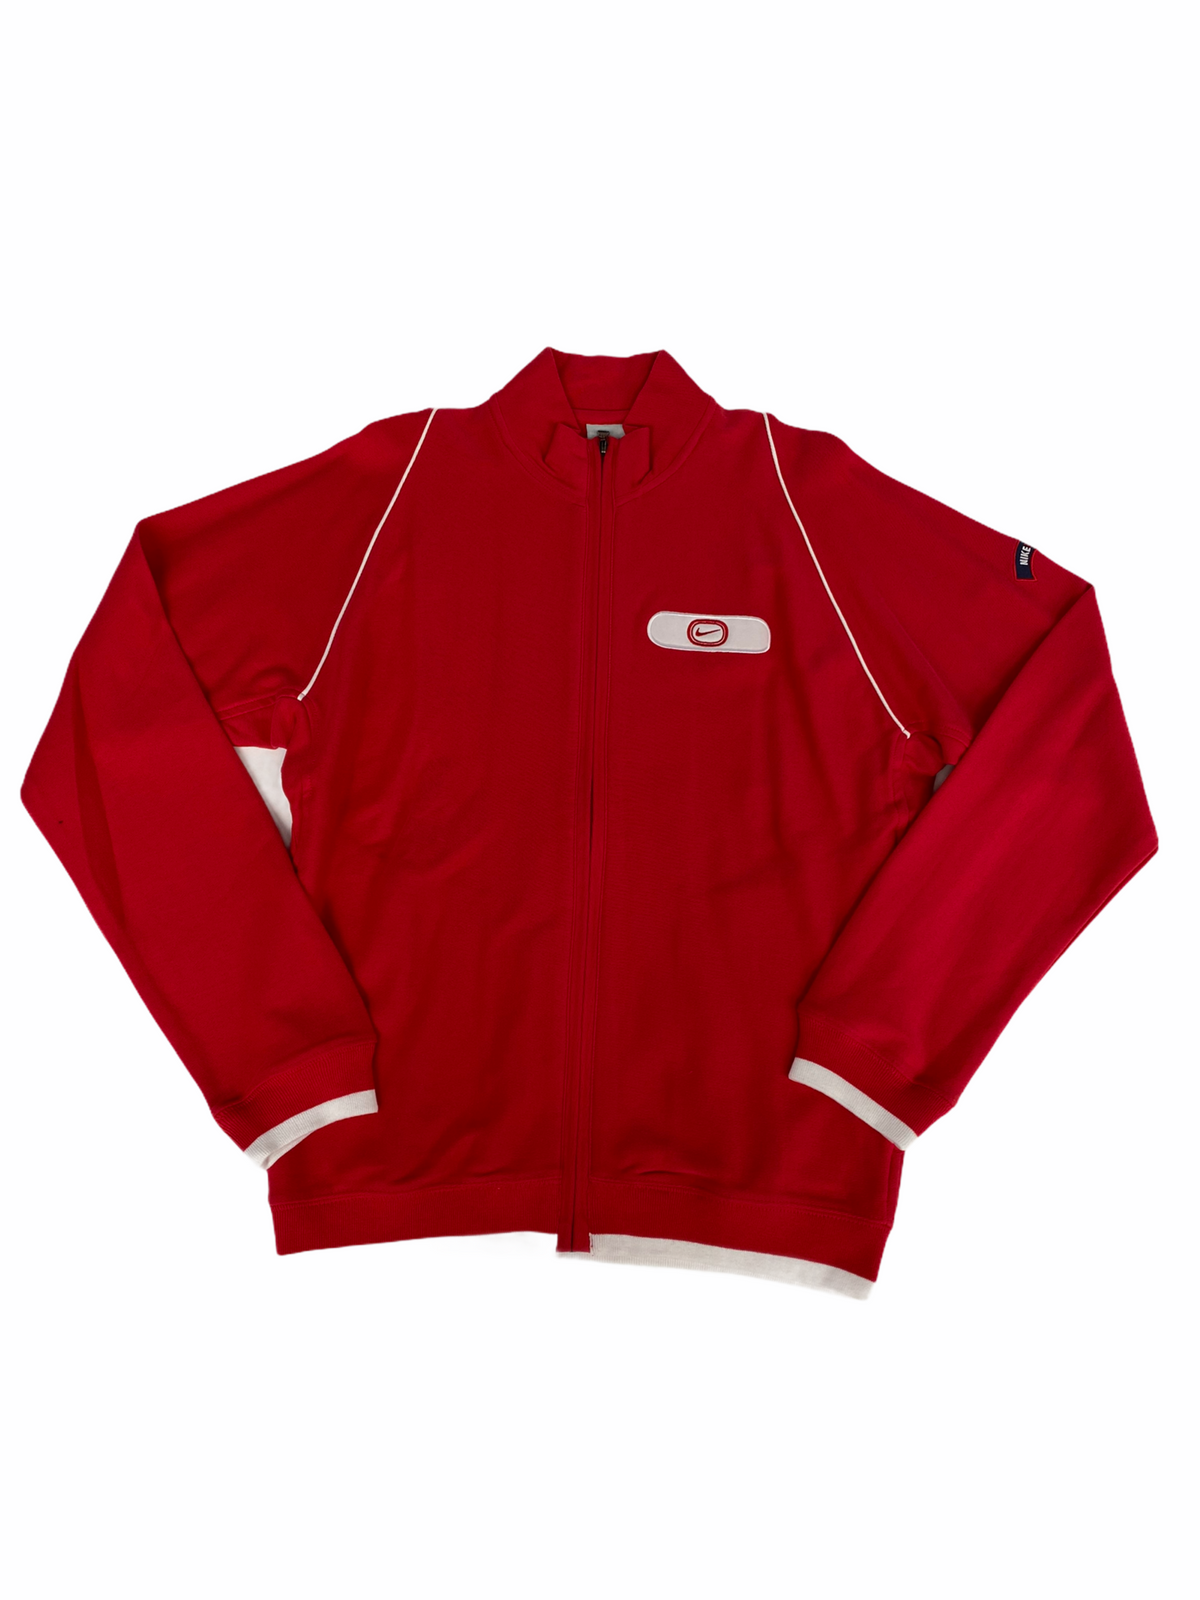 Vintage 2003 Nike Full Zip Track Top in Red - Not In Your Wardrobe™ - [Vendor]